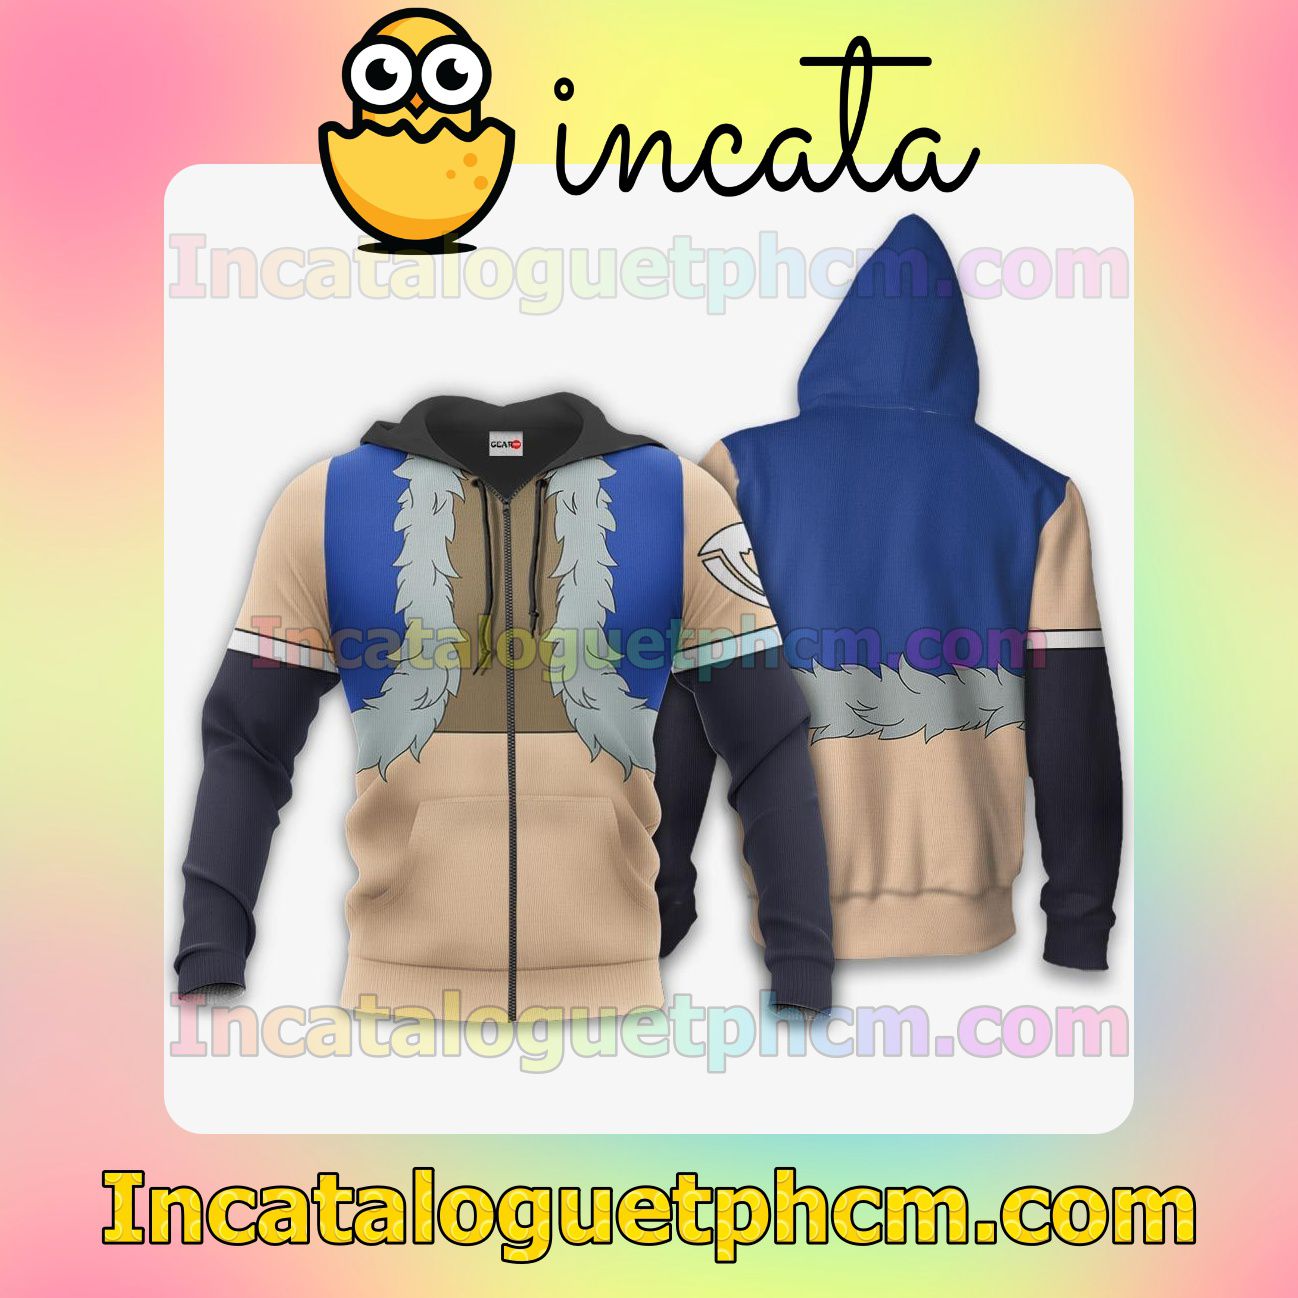 Sting Eucliffe Uniform Sabertooth Fairy Tail Anime Clothing Merch Zip Hoodie Jacket Shirts